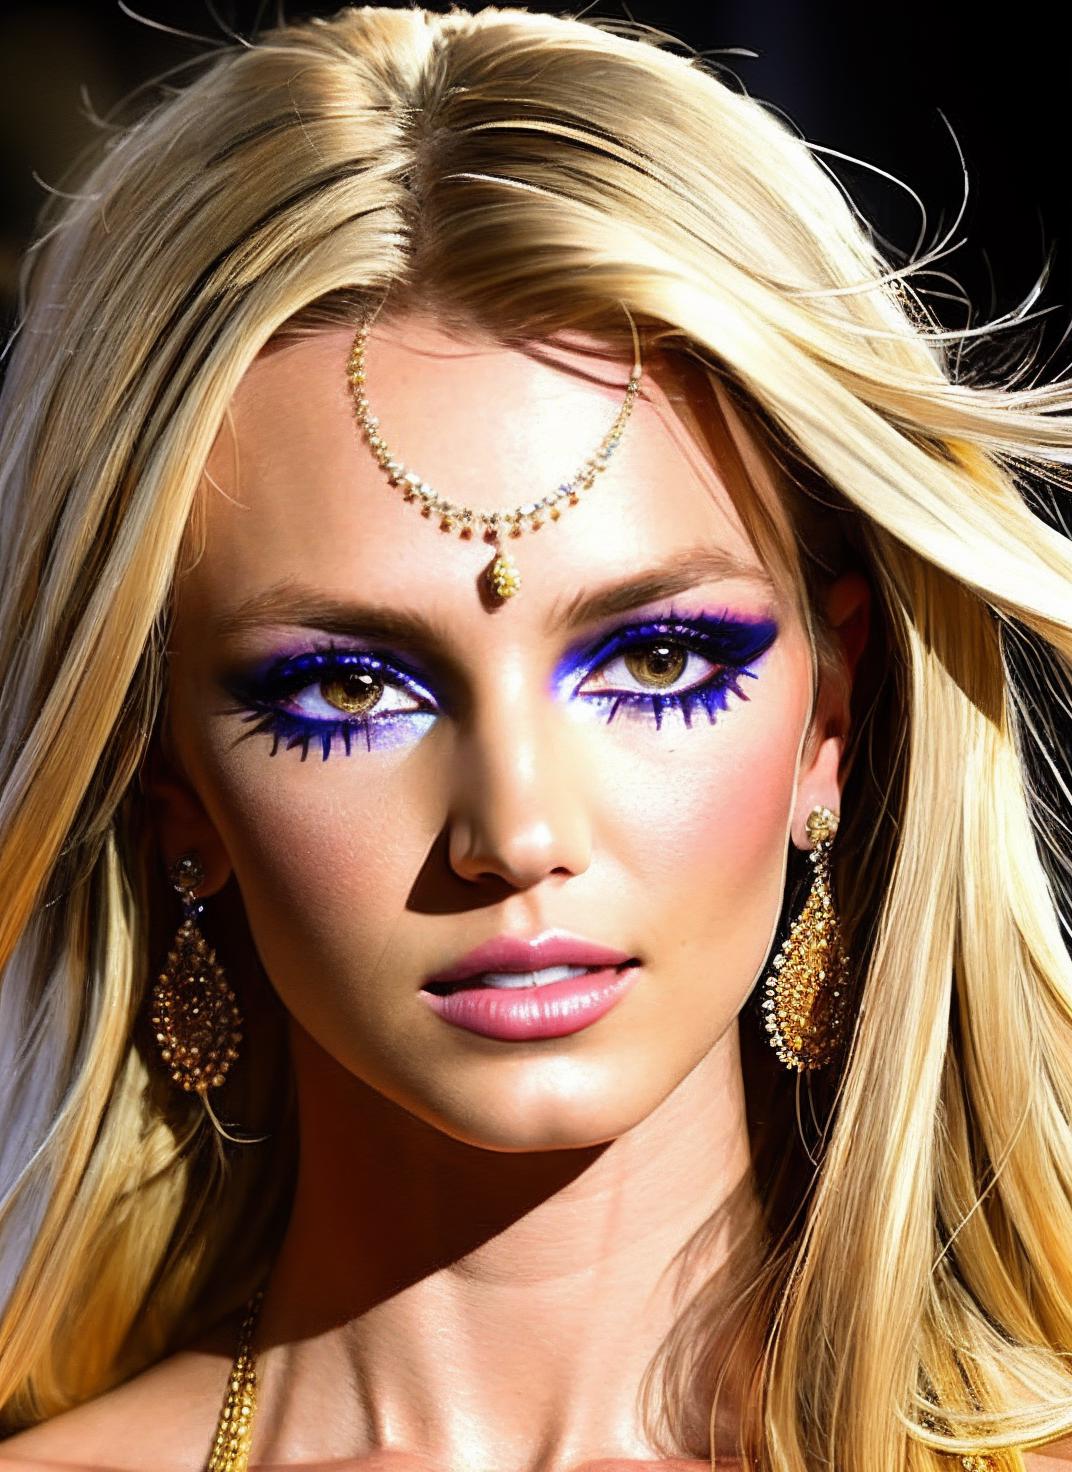 Britney Spears image by malcolmrey